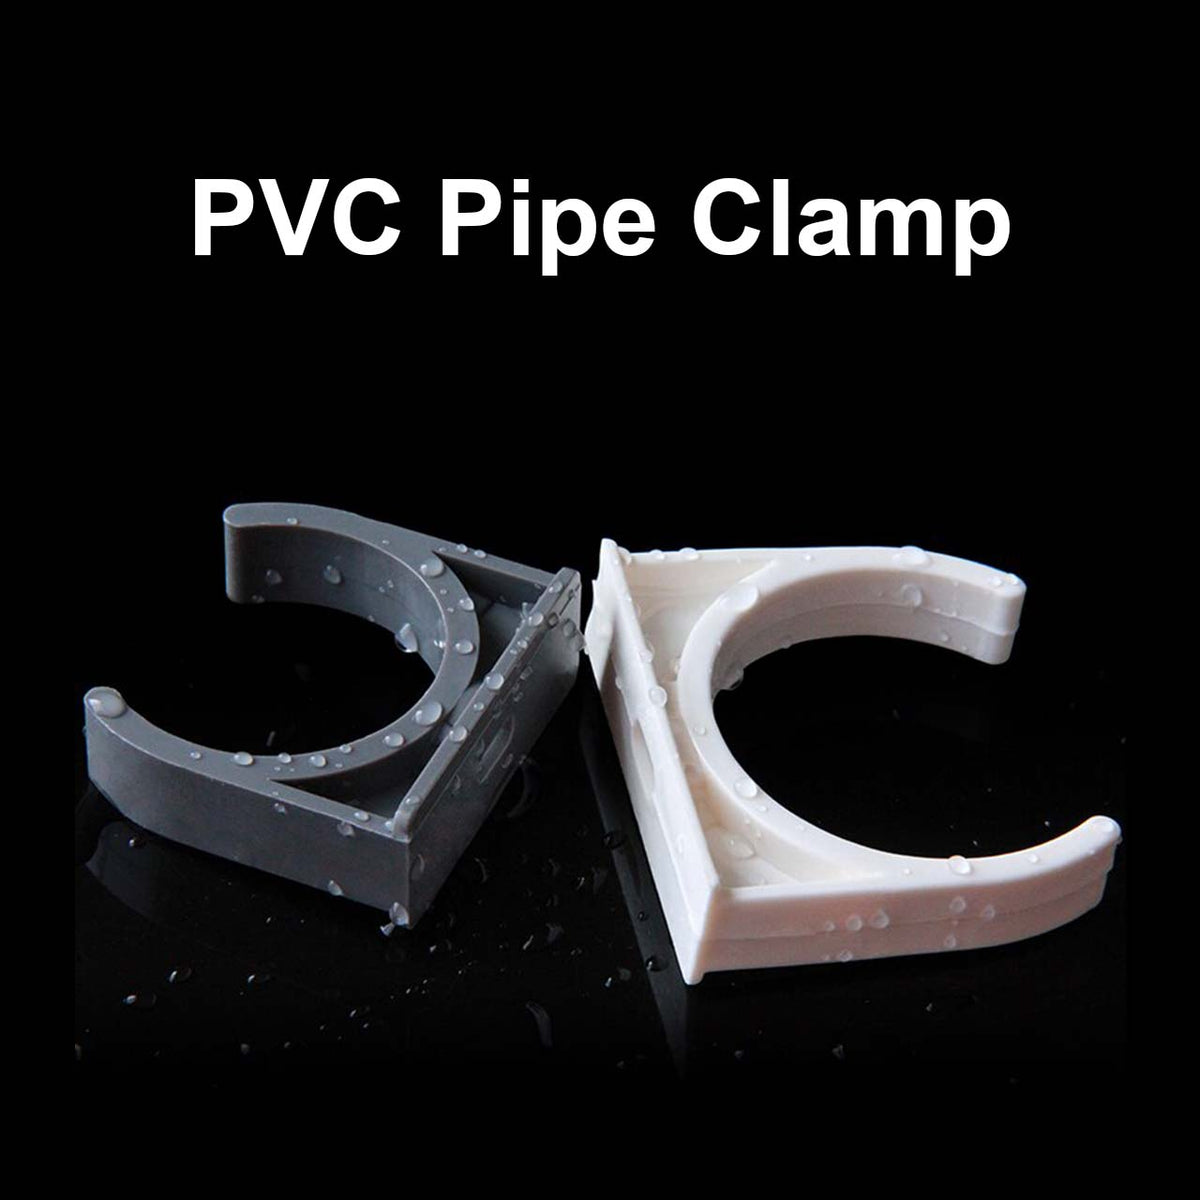 PVC Pipe Clamp